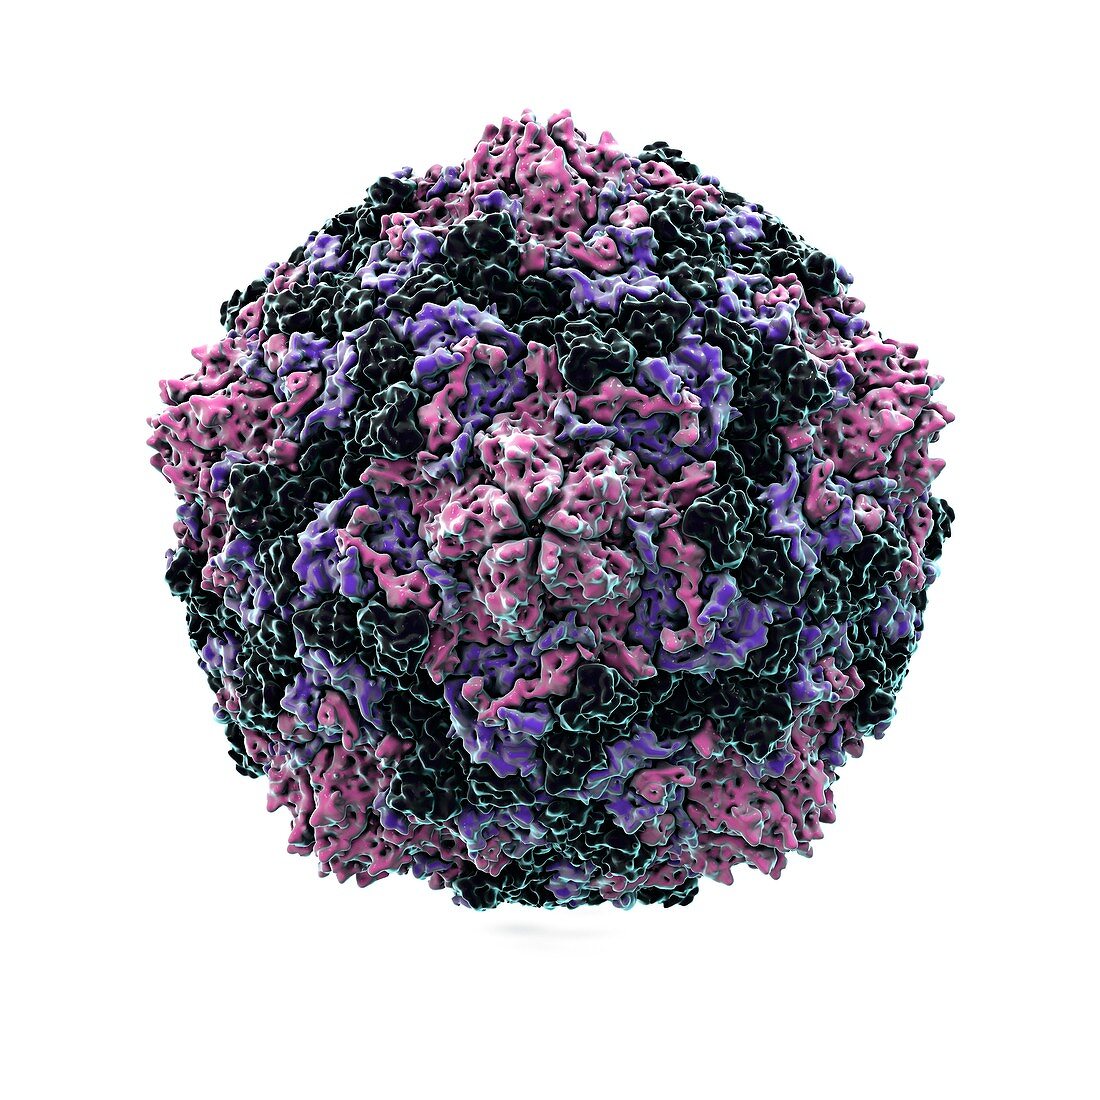 Coxsackie virus particle,artwork